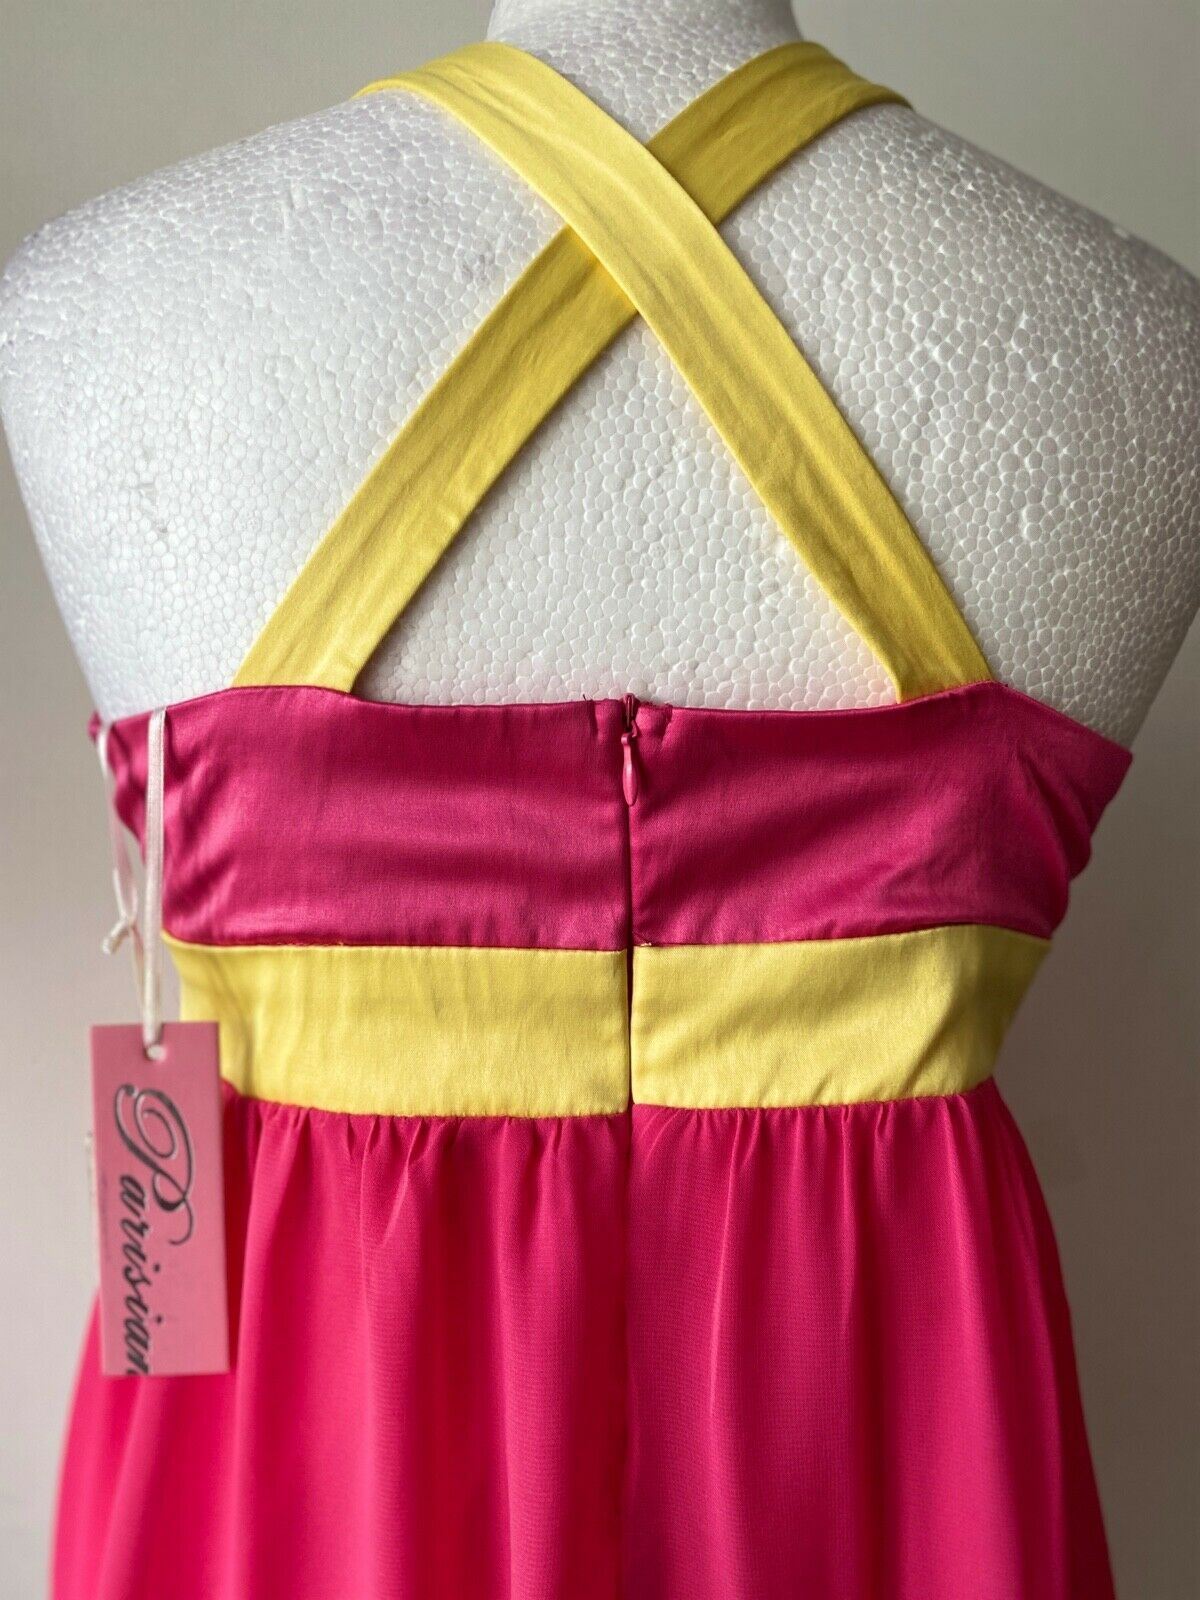 Parisian Limited Edition Pink Yellow Mesh Skirt Dress